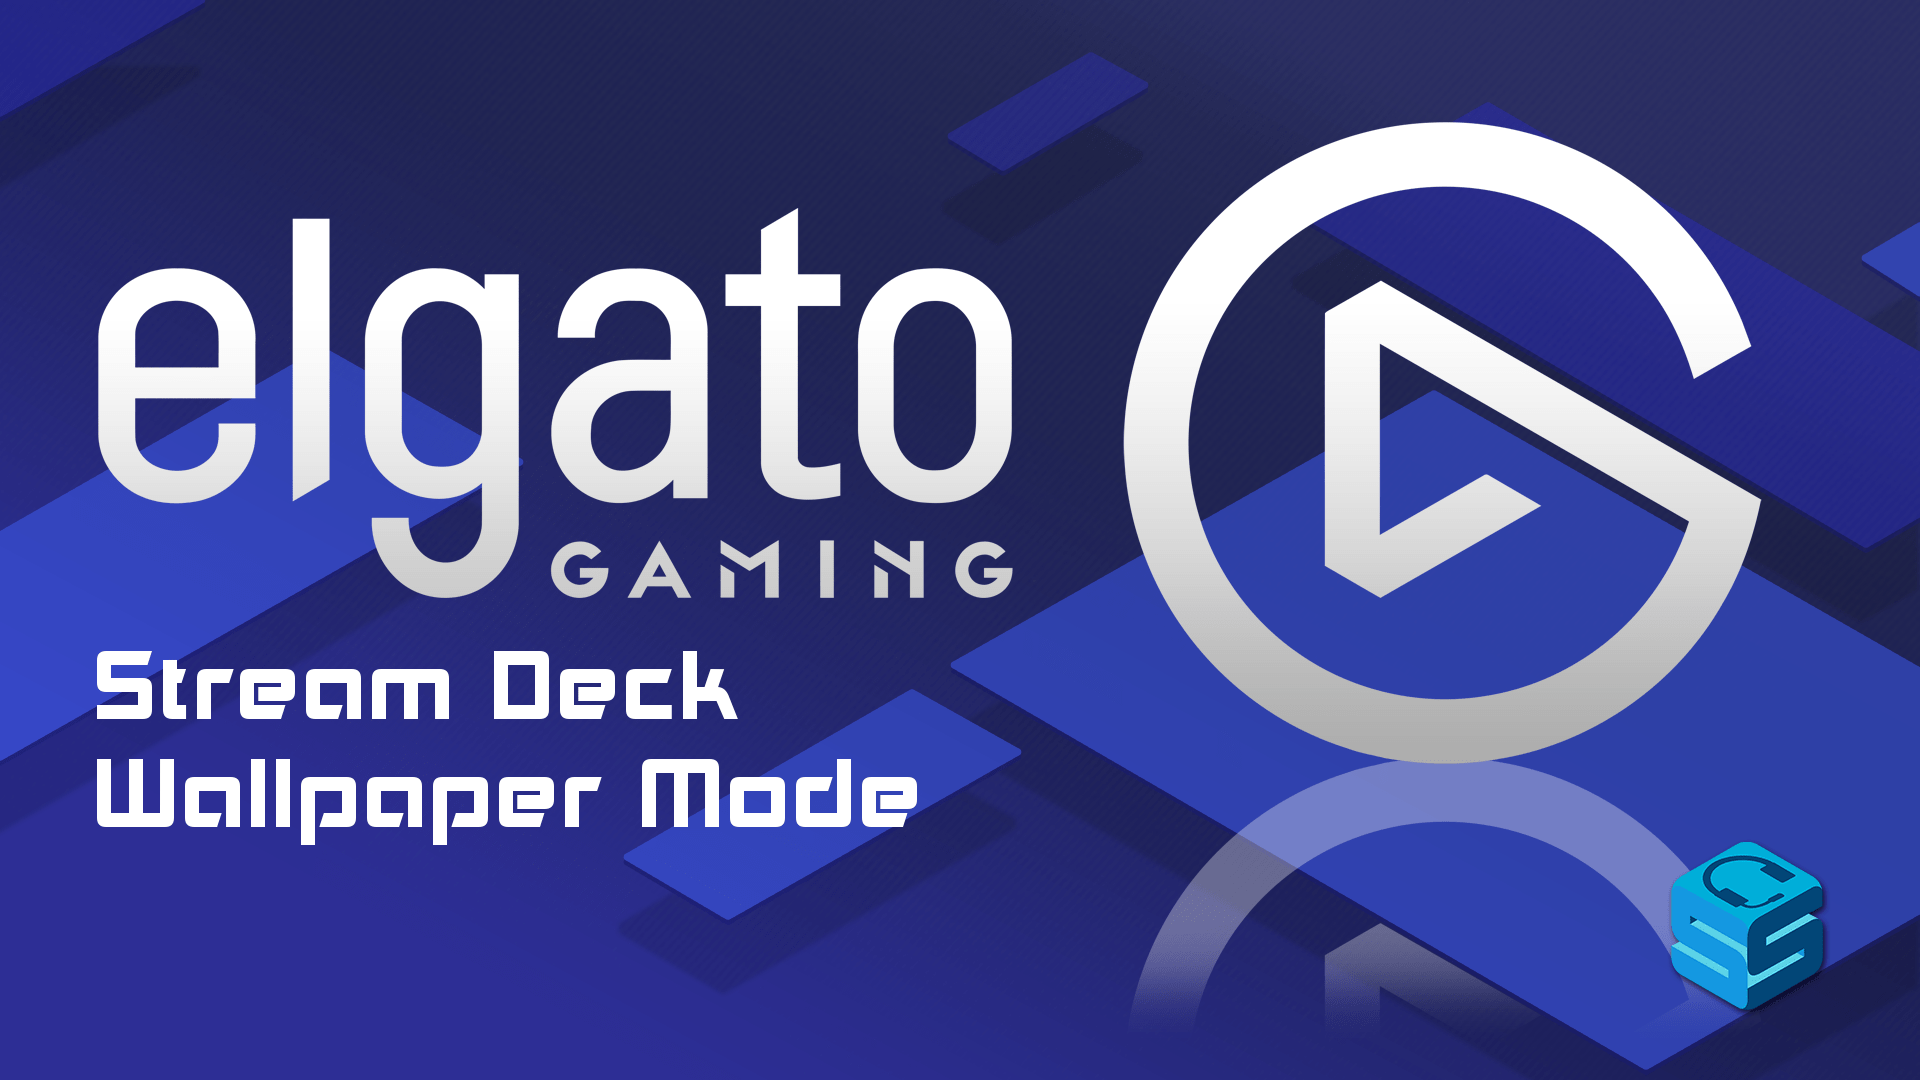 Elgato Adds Wallpaper Mode for Stream Deck Key Creator